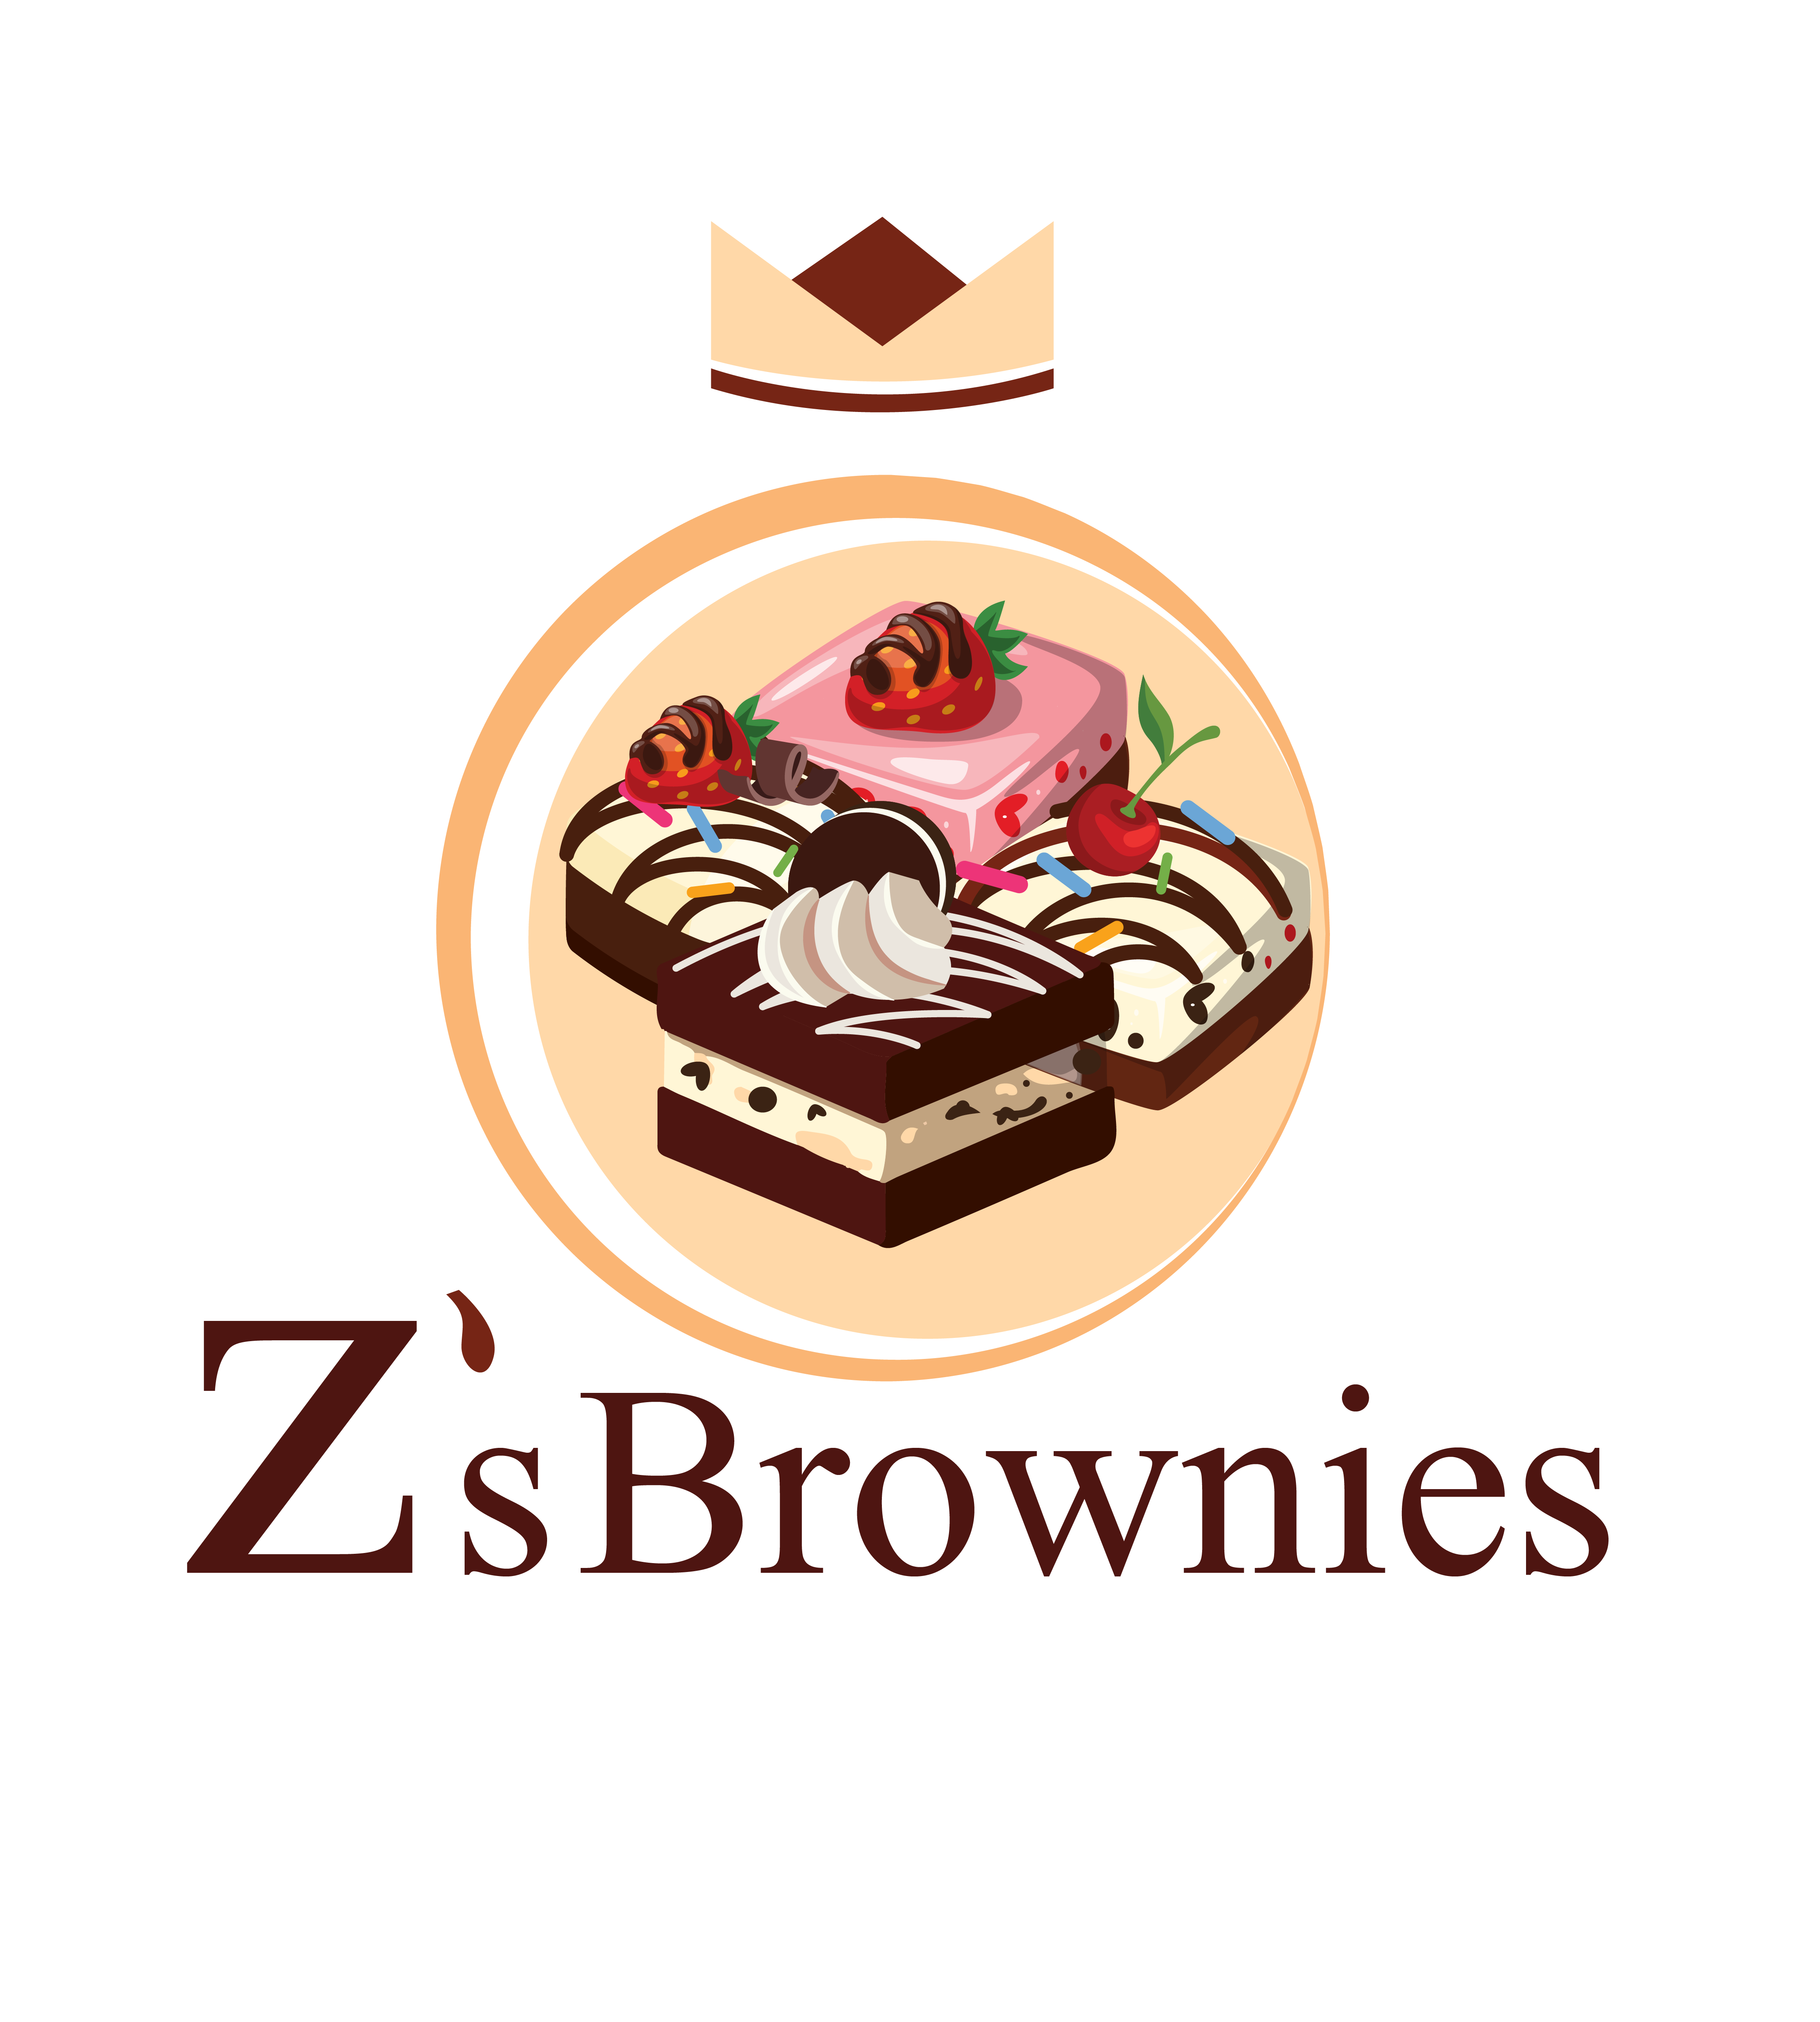 Z's Brownies-logo.jpg